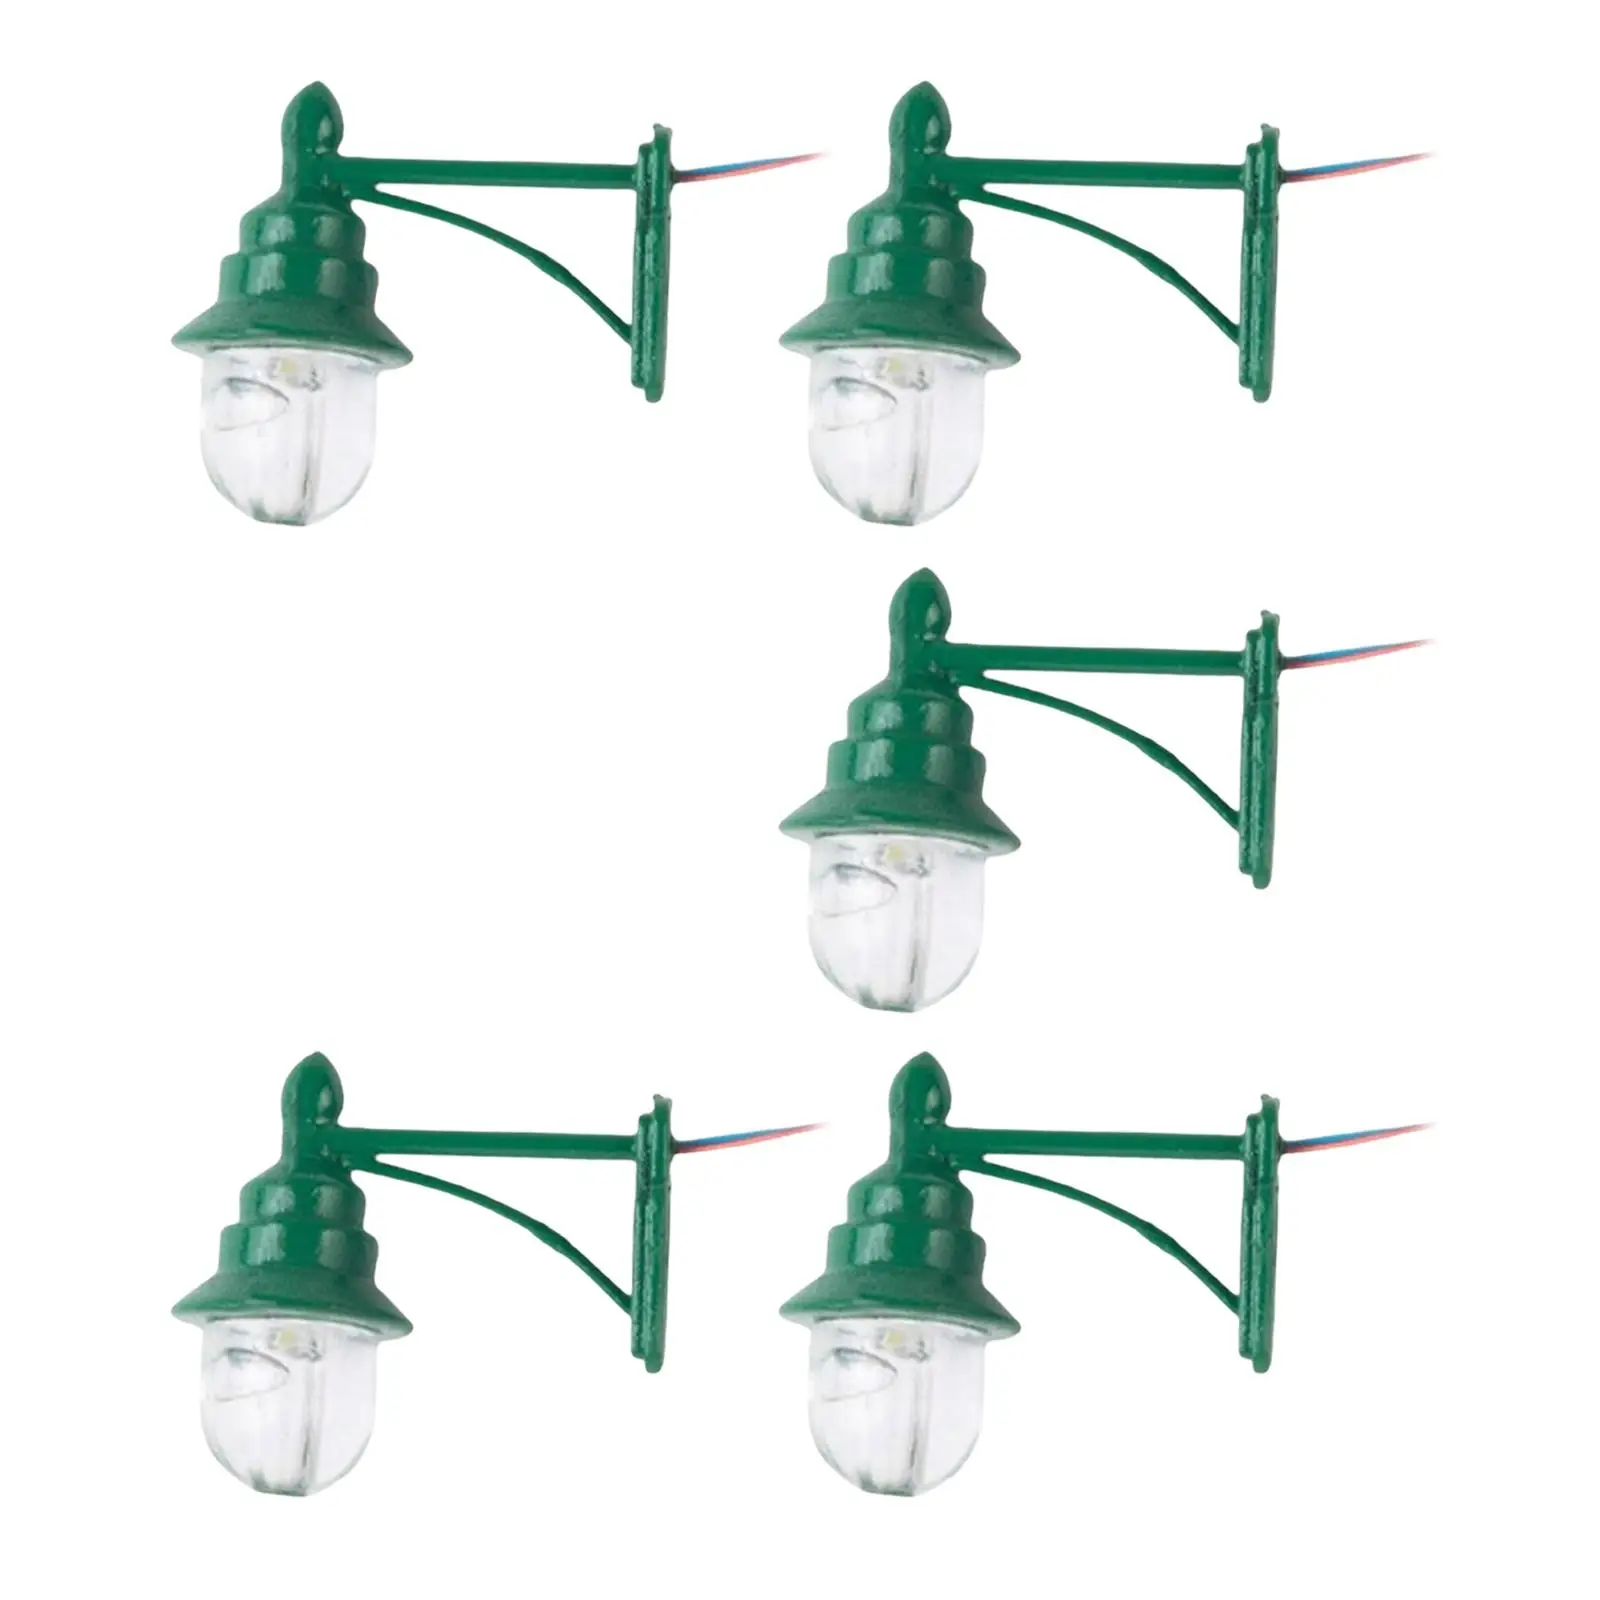 1/87 Model Railway Lamps Set of 5 Lamp Miniature Ornament for Micro Landscape Accs